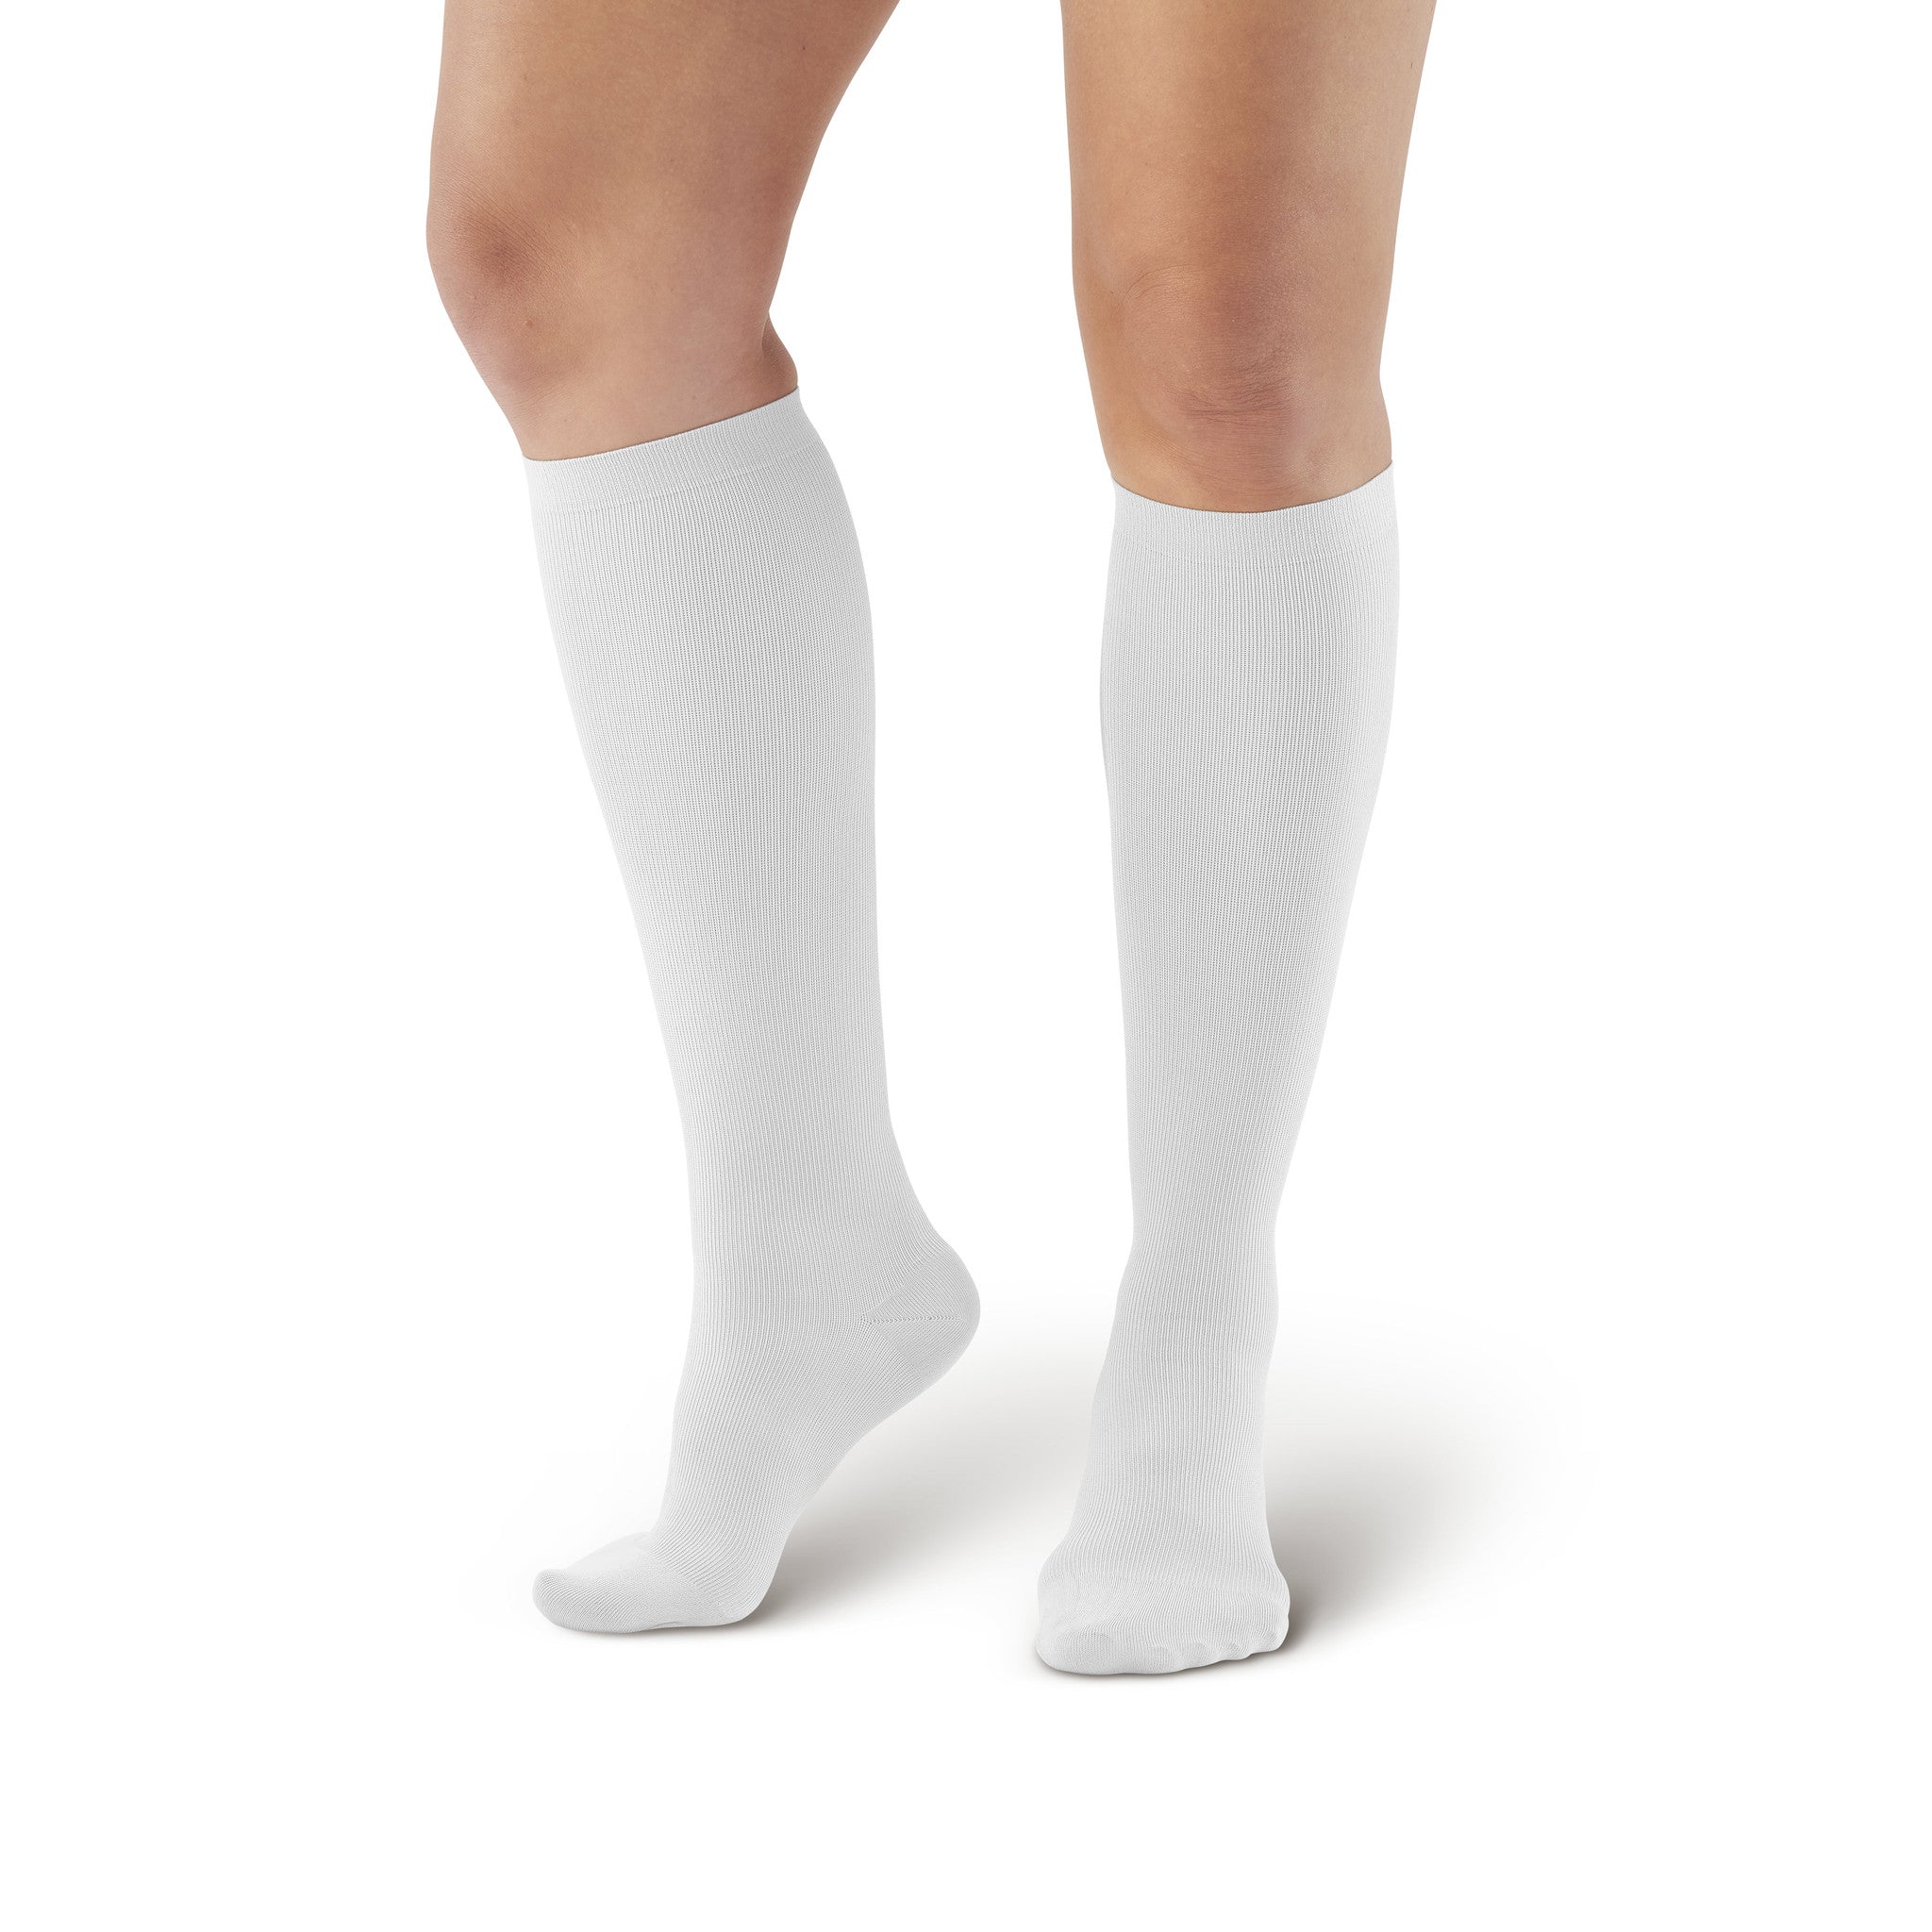 Women's Compression Socks l AW Style 112 l Ames Walker Price Guarantee